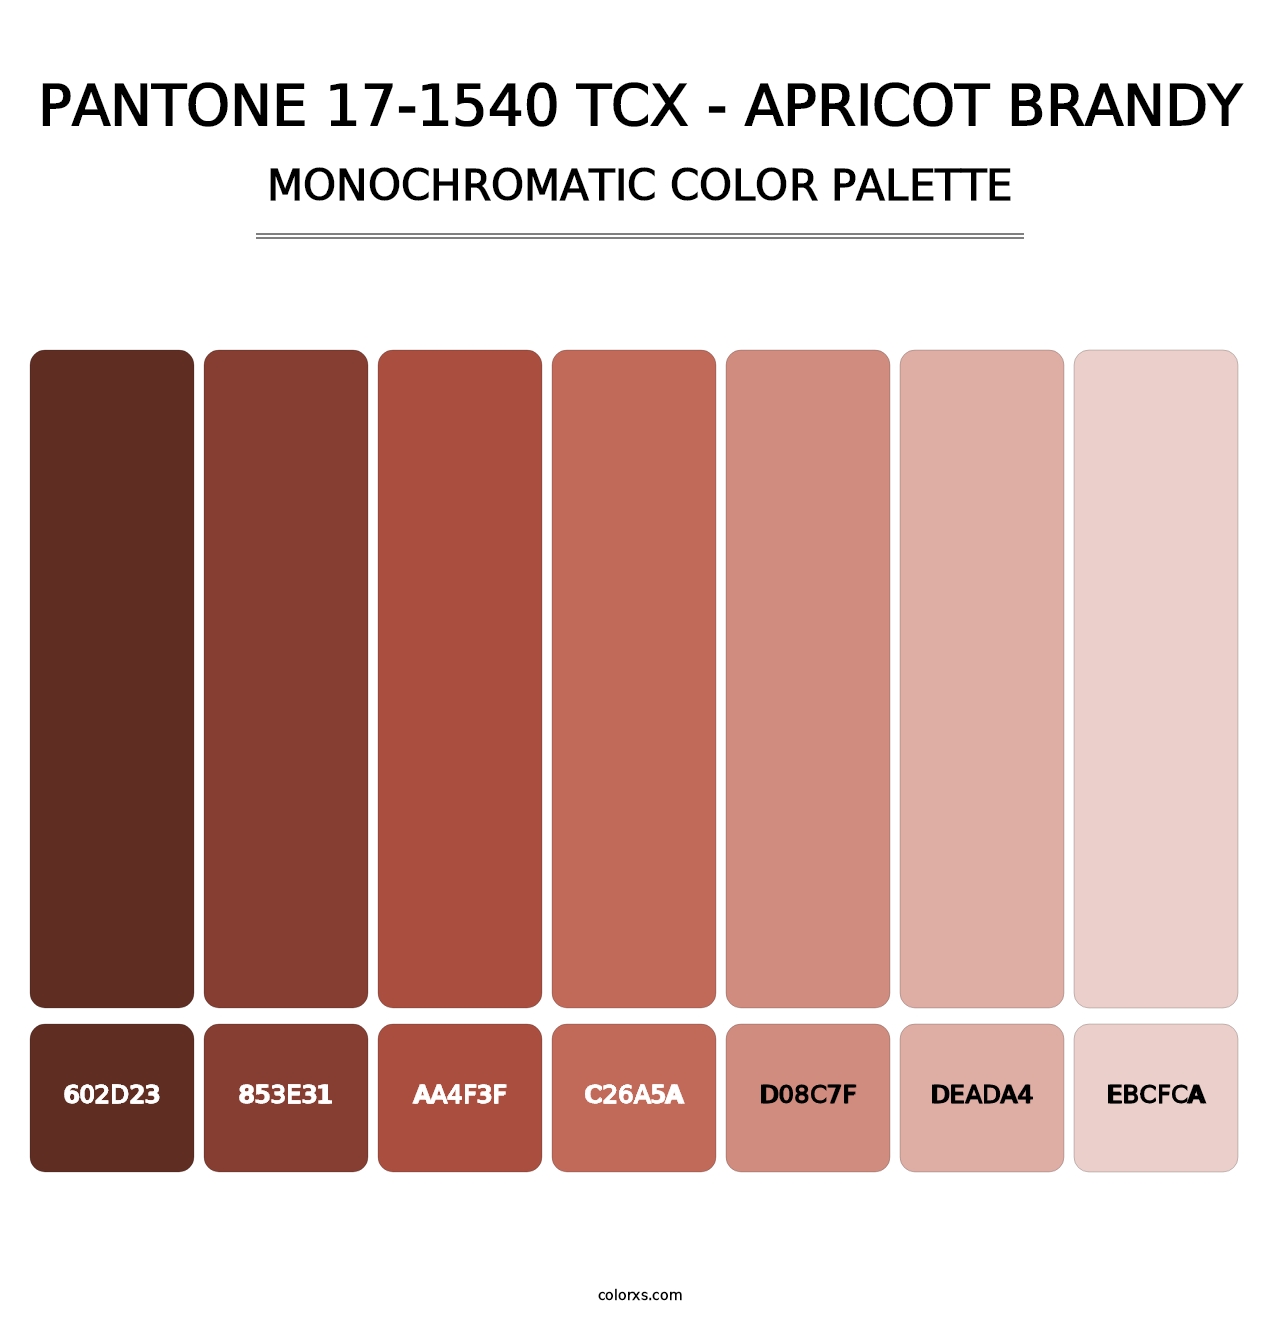 PANTONE 17-1540 TCX - Apricot Brandy - Monochromatic Color Palette